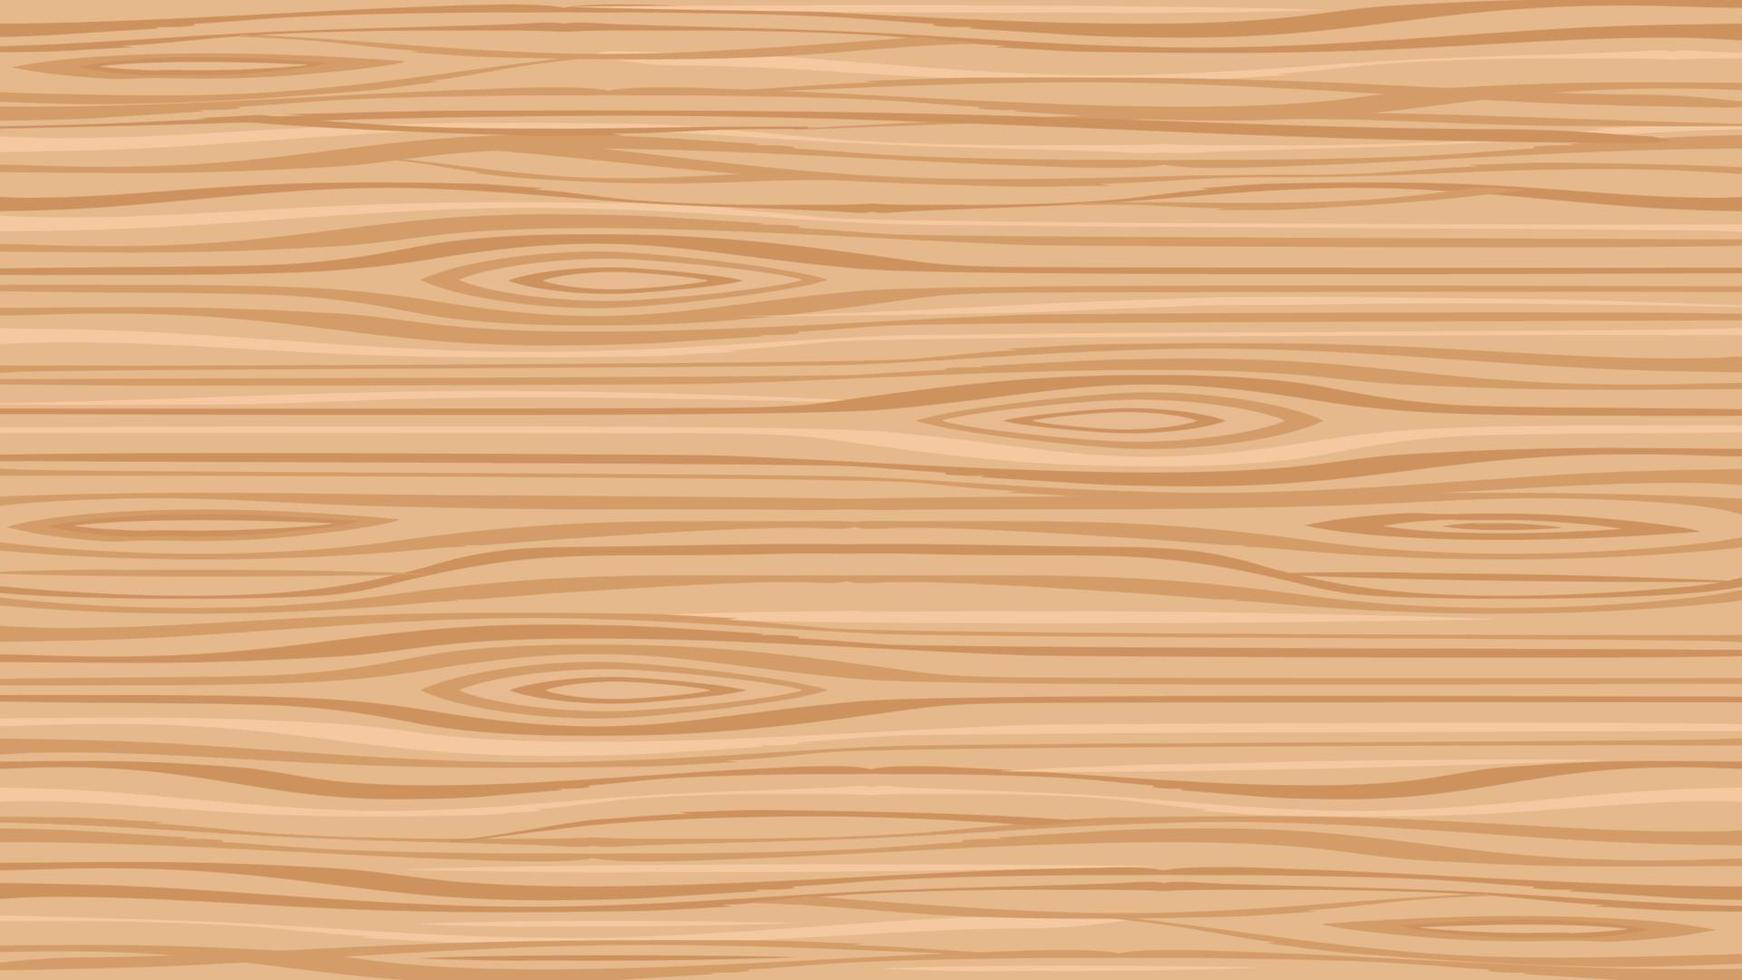 Wood texture pattern light brown vector design background